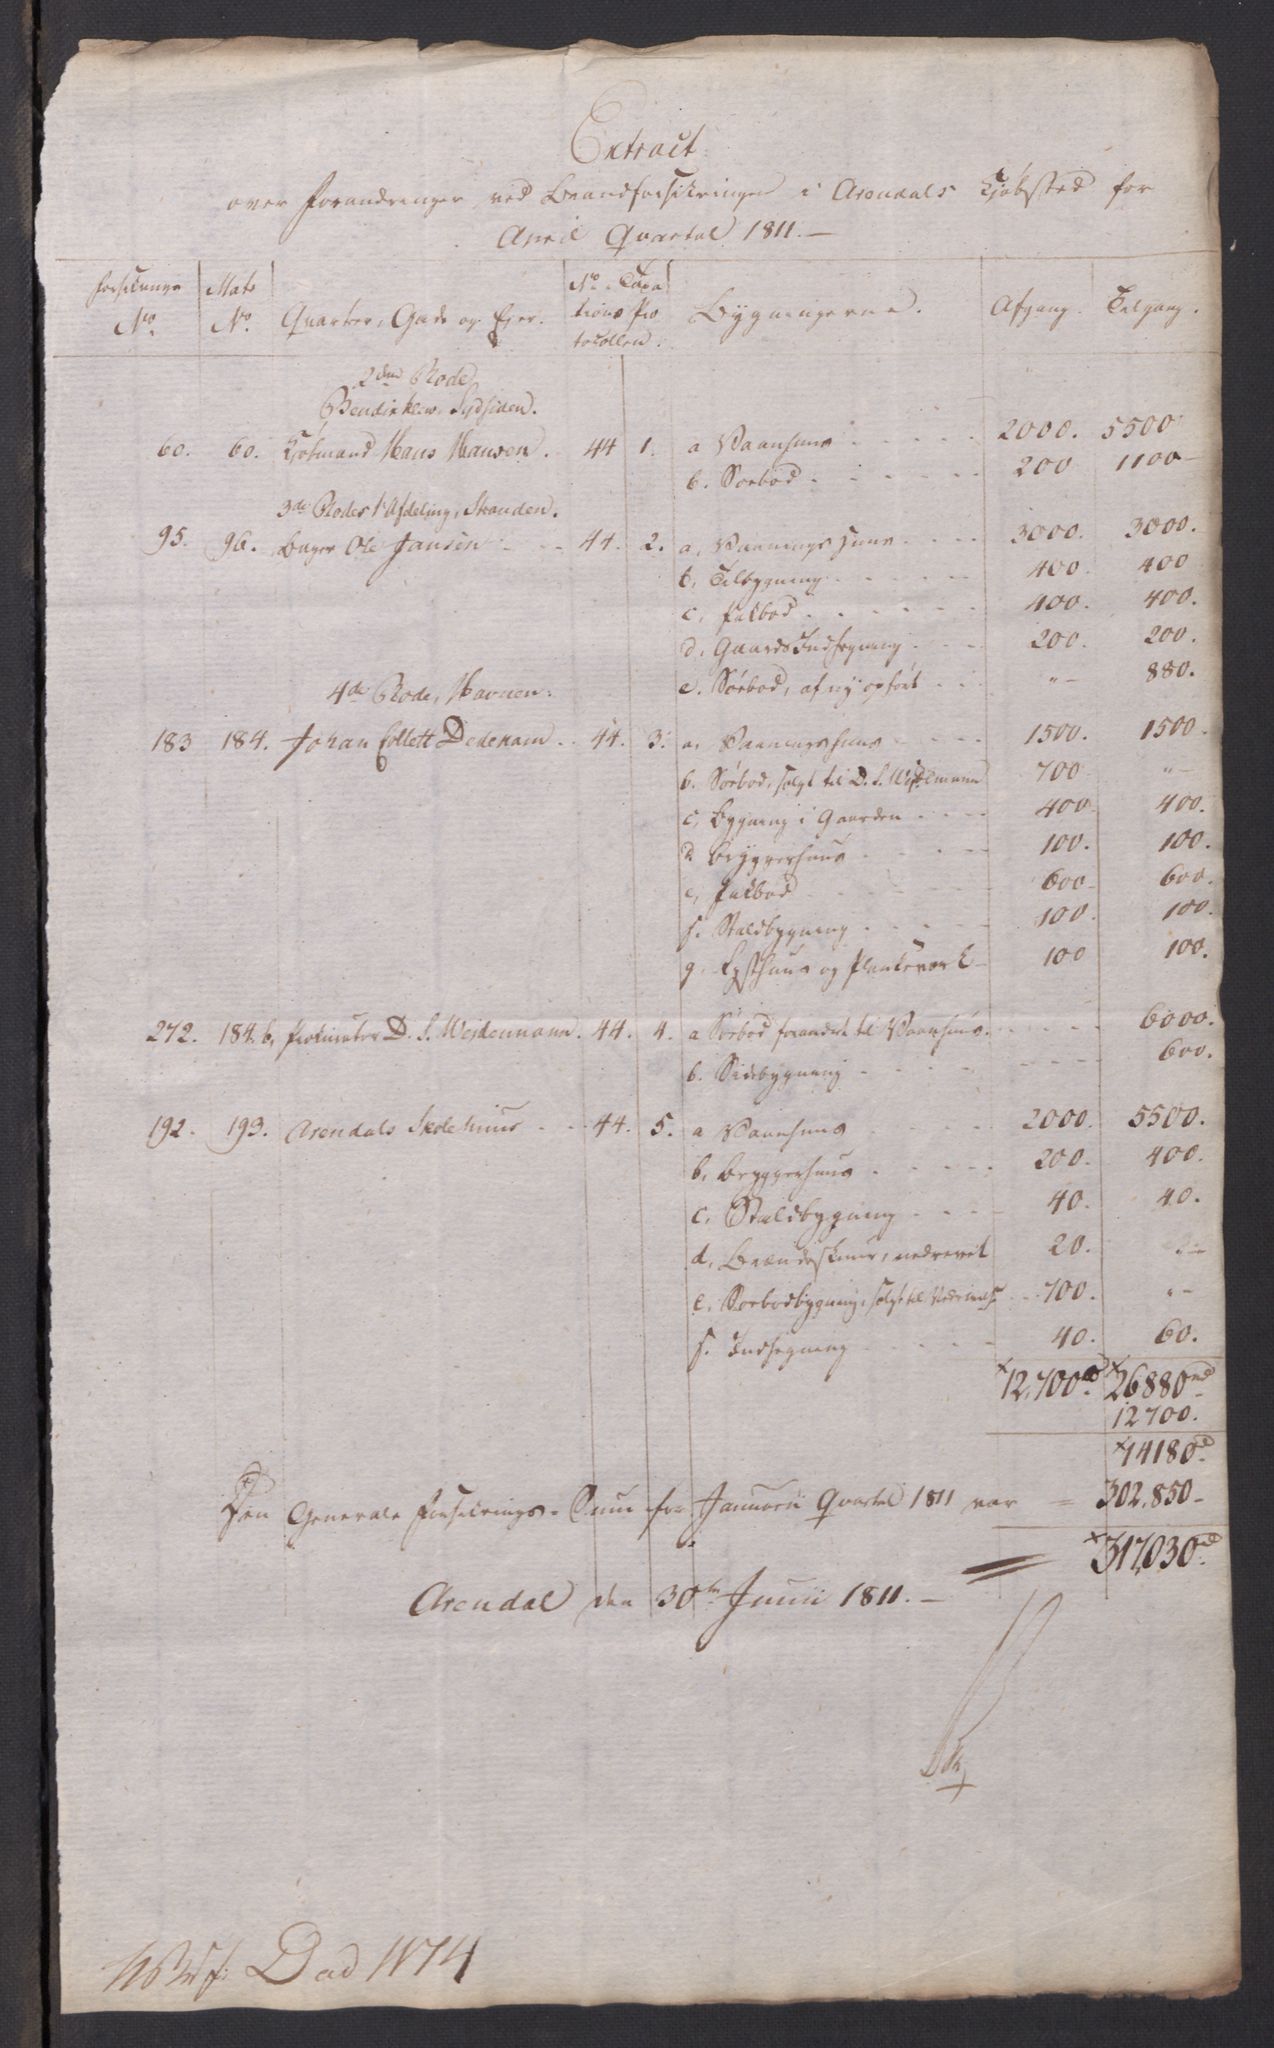 Kommersekollegiet, Brannforsikringskontoret 1767-1814, RA/EA-5458/F/Fa/L0003/0002: Arendal / Dokumenter, 1808-1813